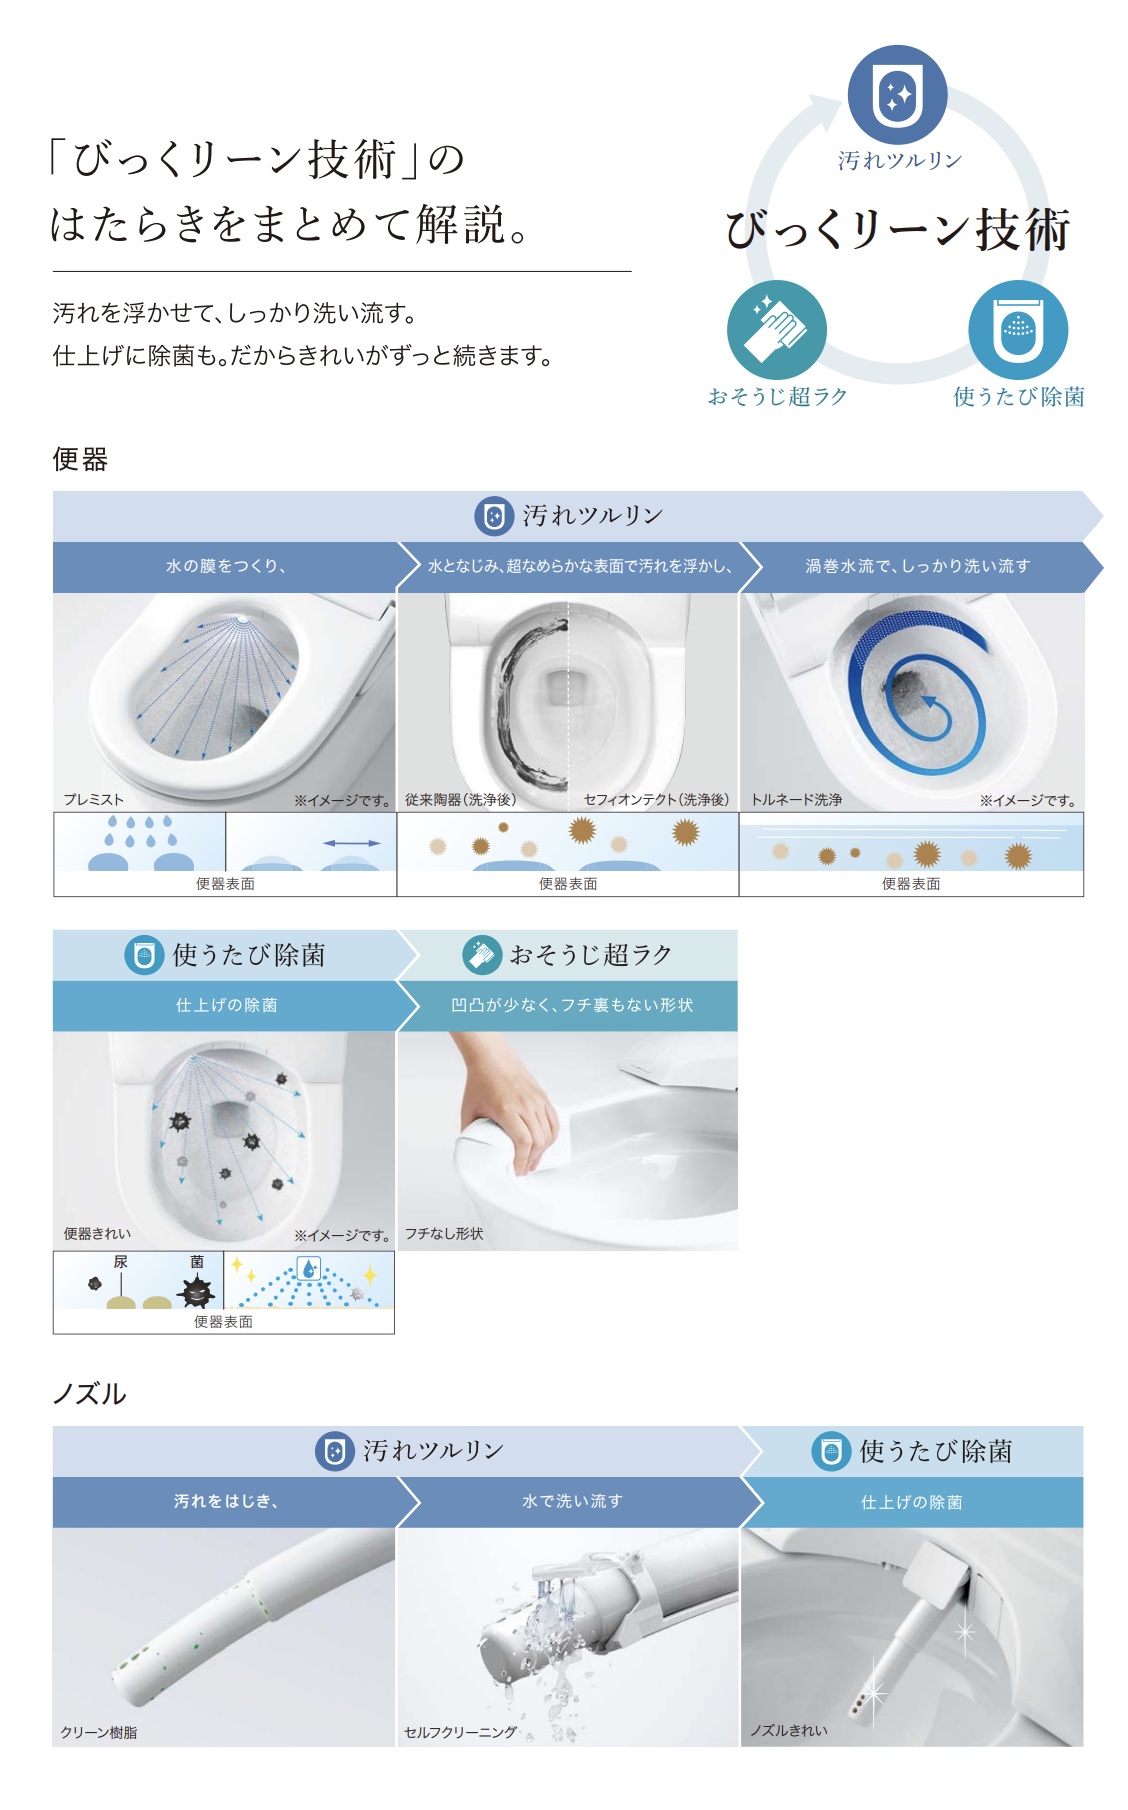 CES9710Pのトイレきれいの技術